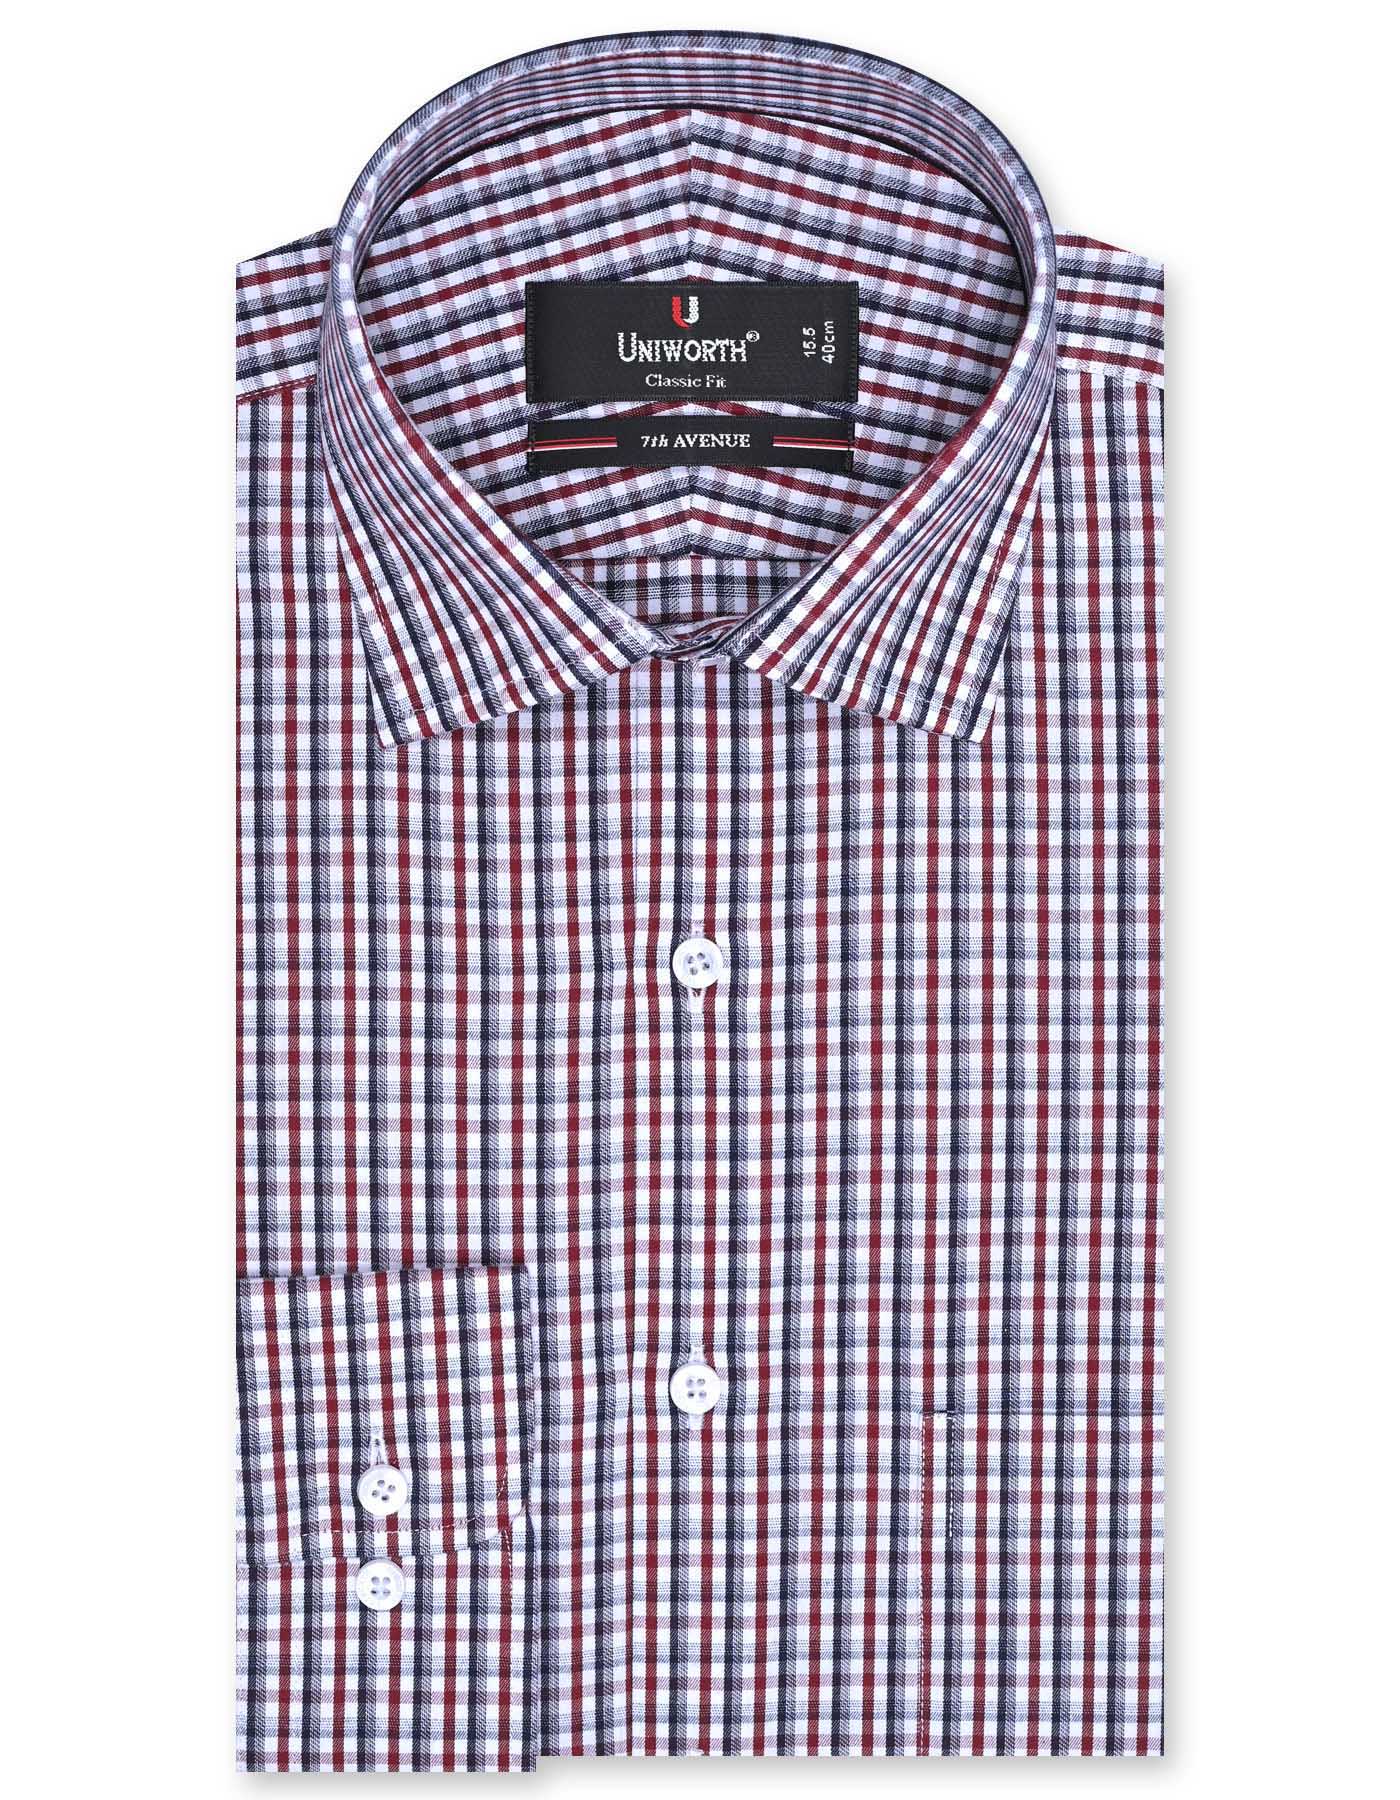 Shirts for Men | Dress Shirt Online Shopping in Pakistan